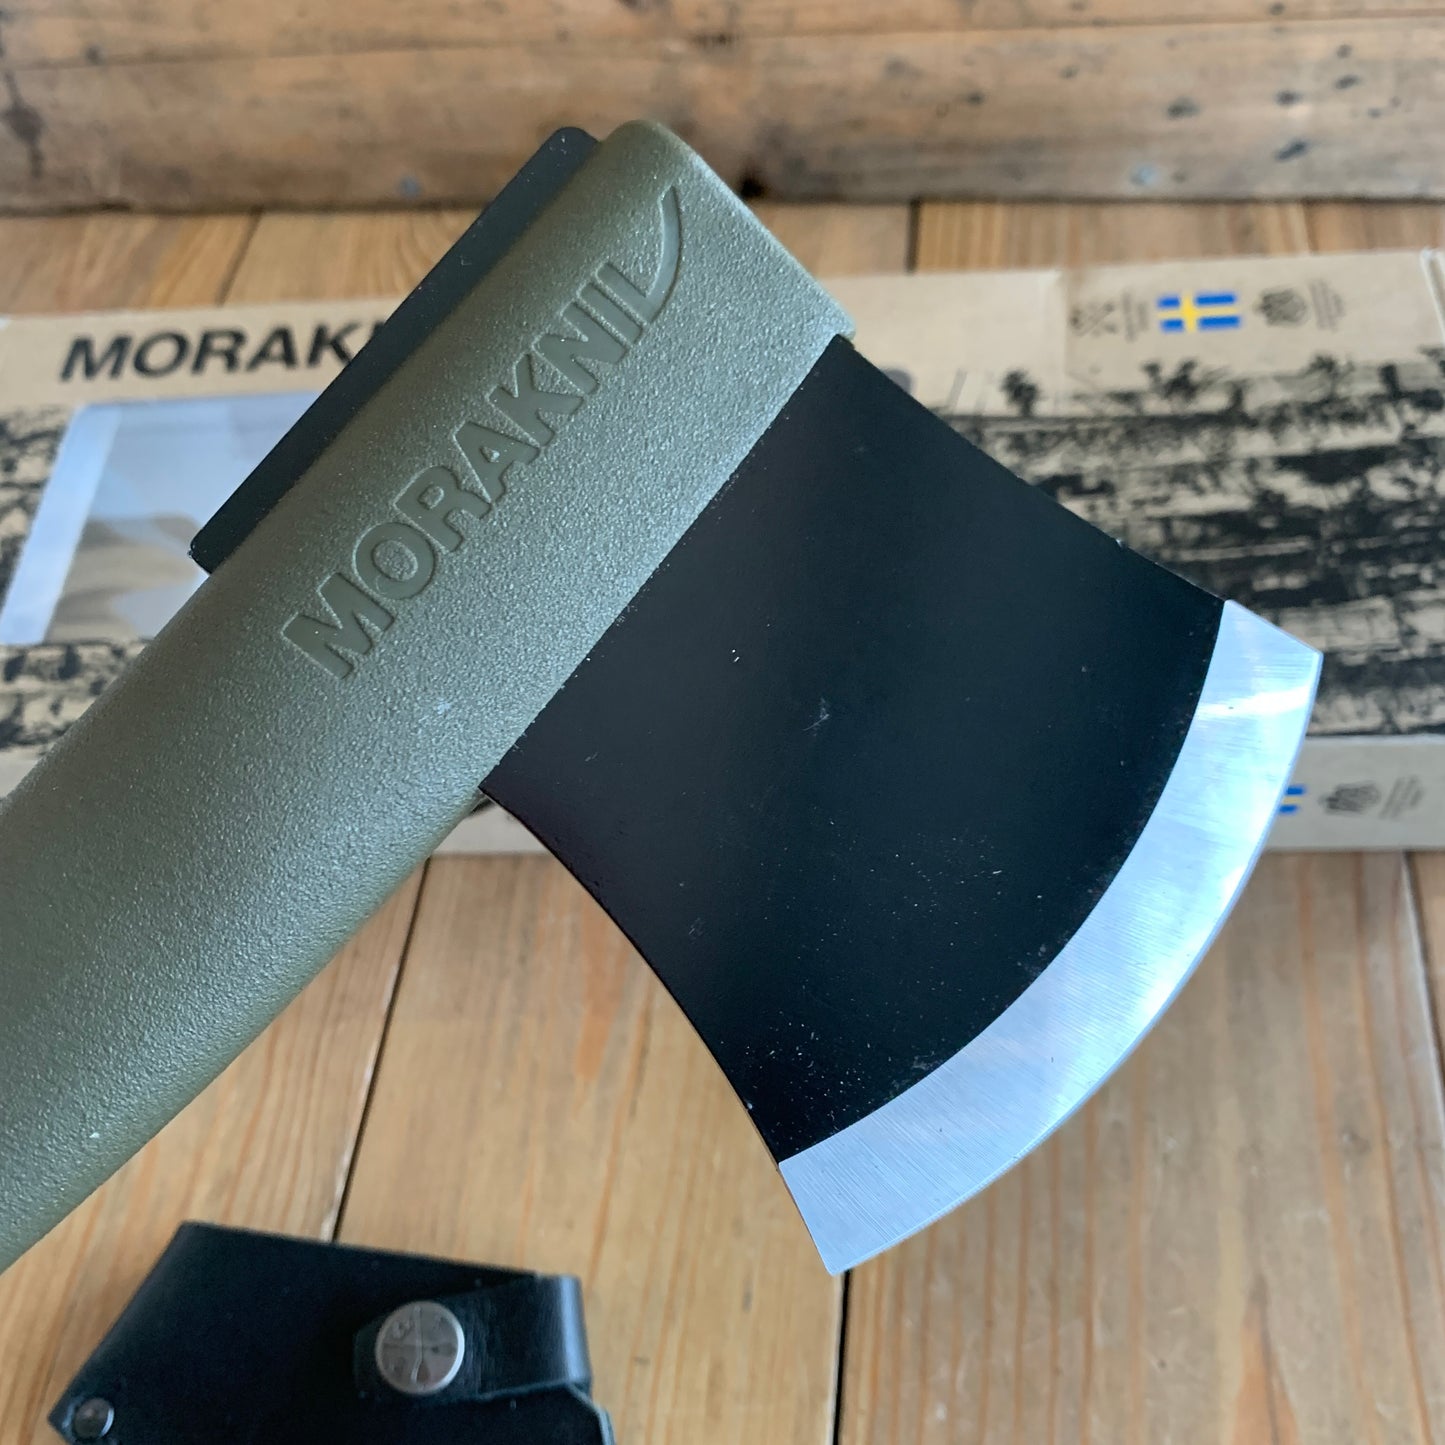 NEW SHARP! Swedish MORAkniv MORA lightweight AXE